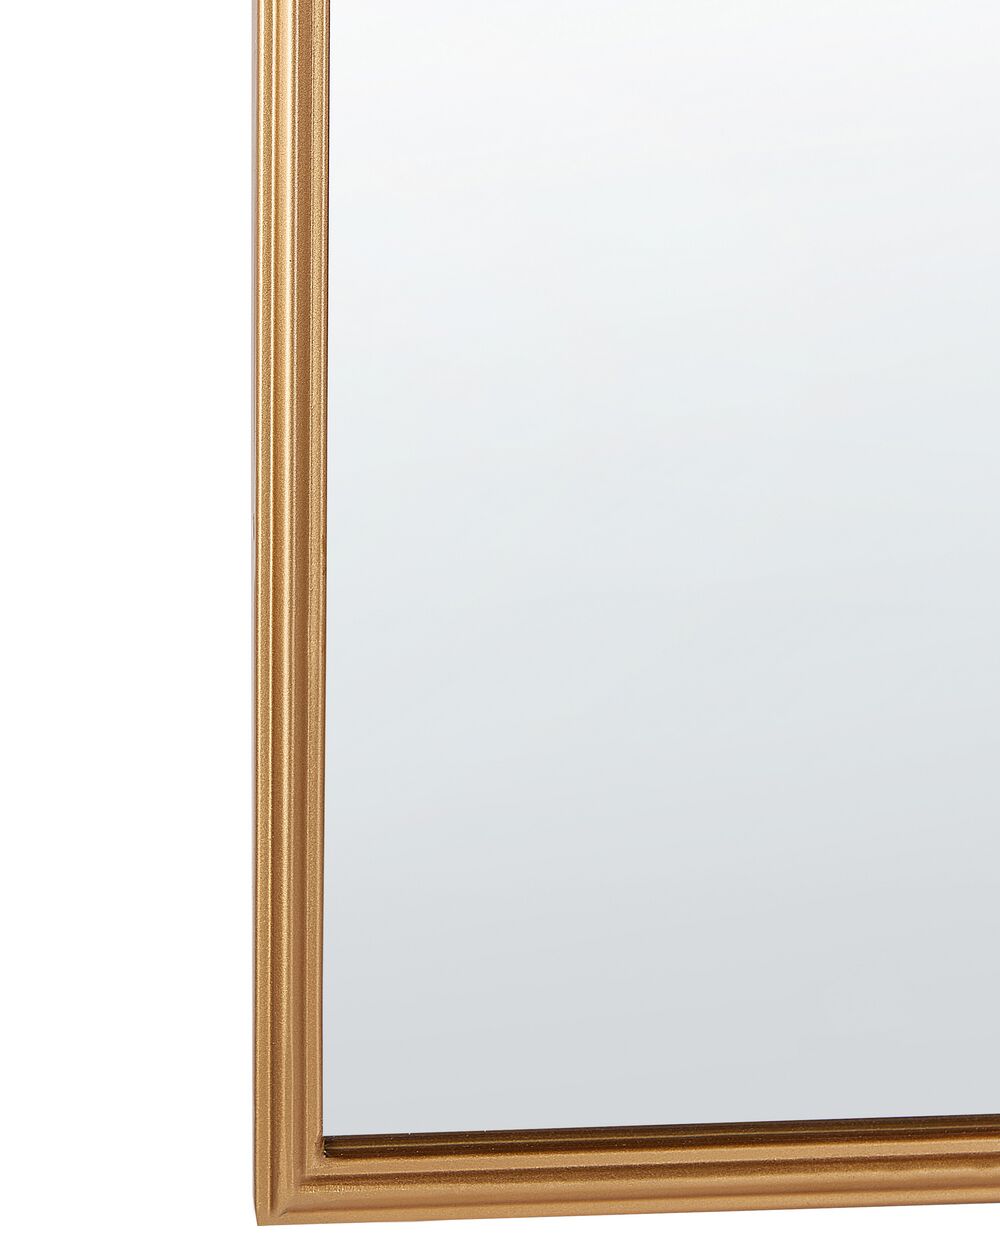 Espejo Pared Decorativo Ovalado Irregular Diseño Elegante Madera 32 cm